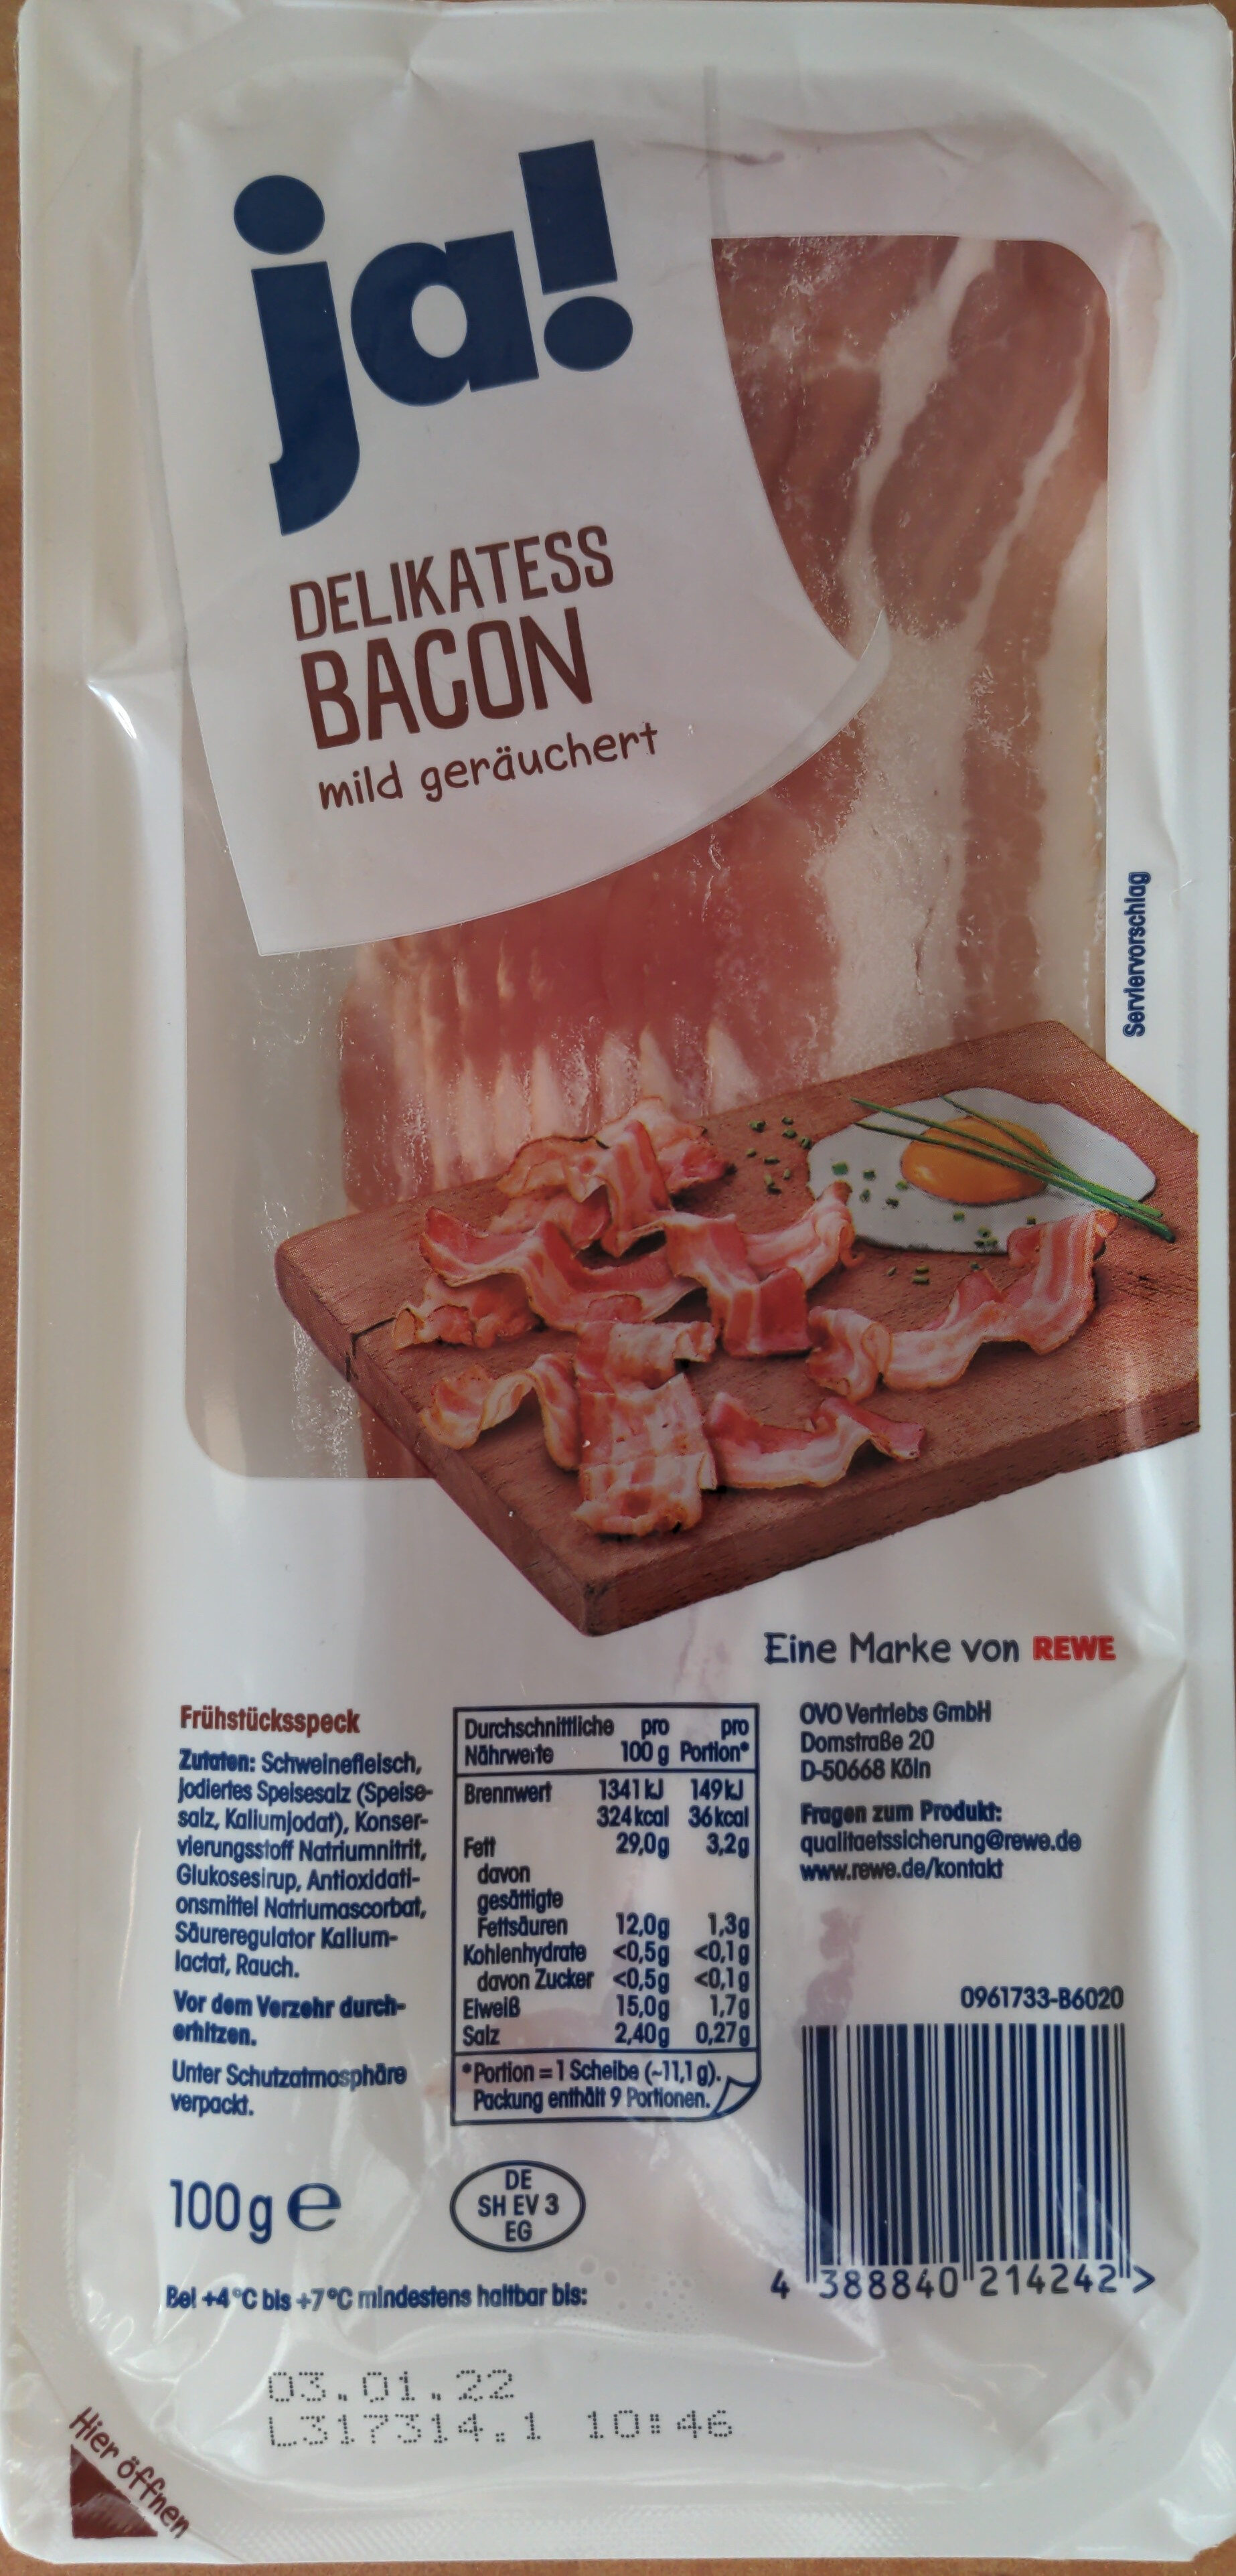 Delikatess Bacon mild geräuchert - Product - de